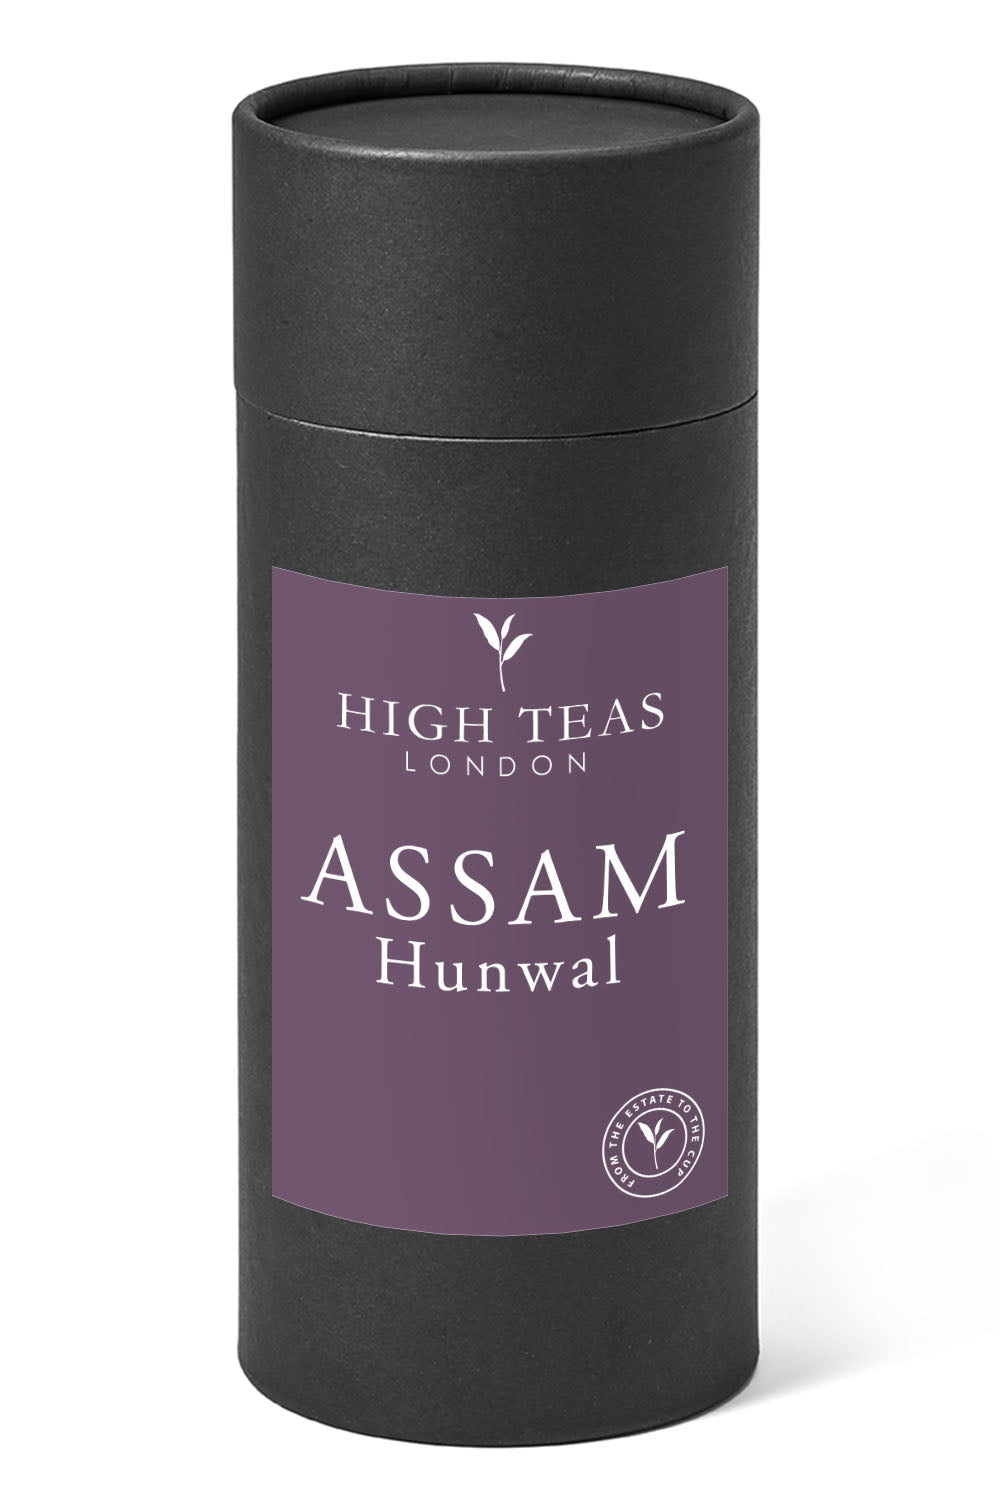 Assam Hunwal 2nd flush-150g gift-Loose Leaf Tea-High Teas